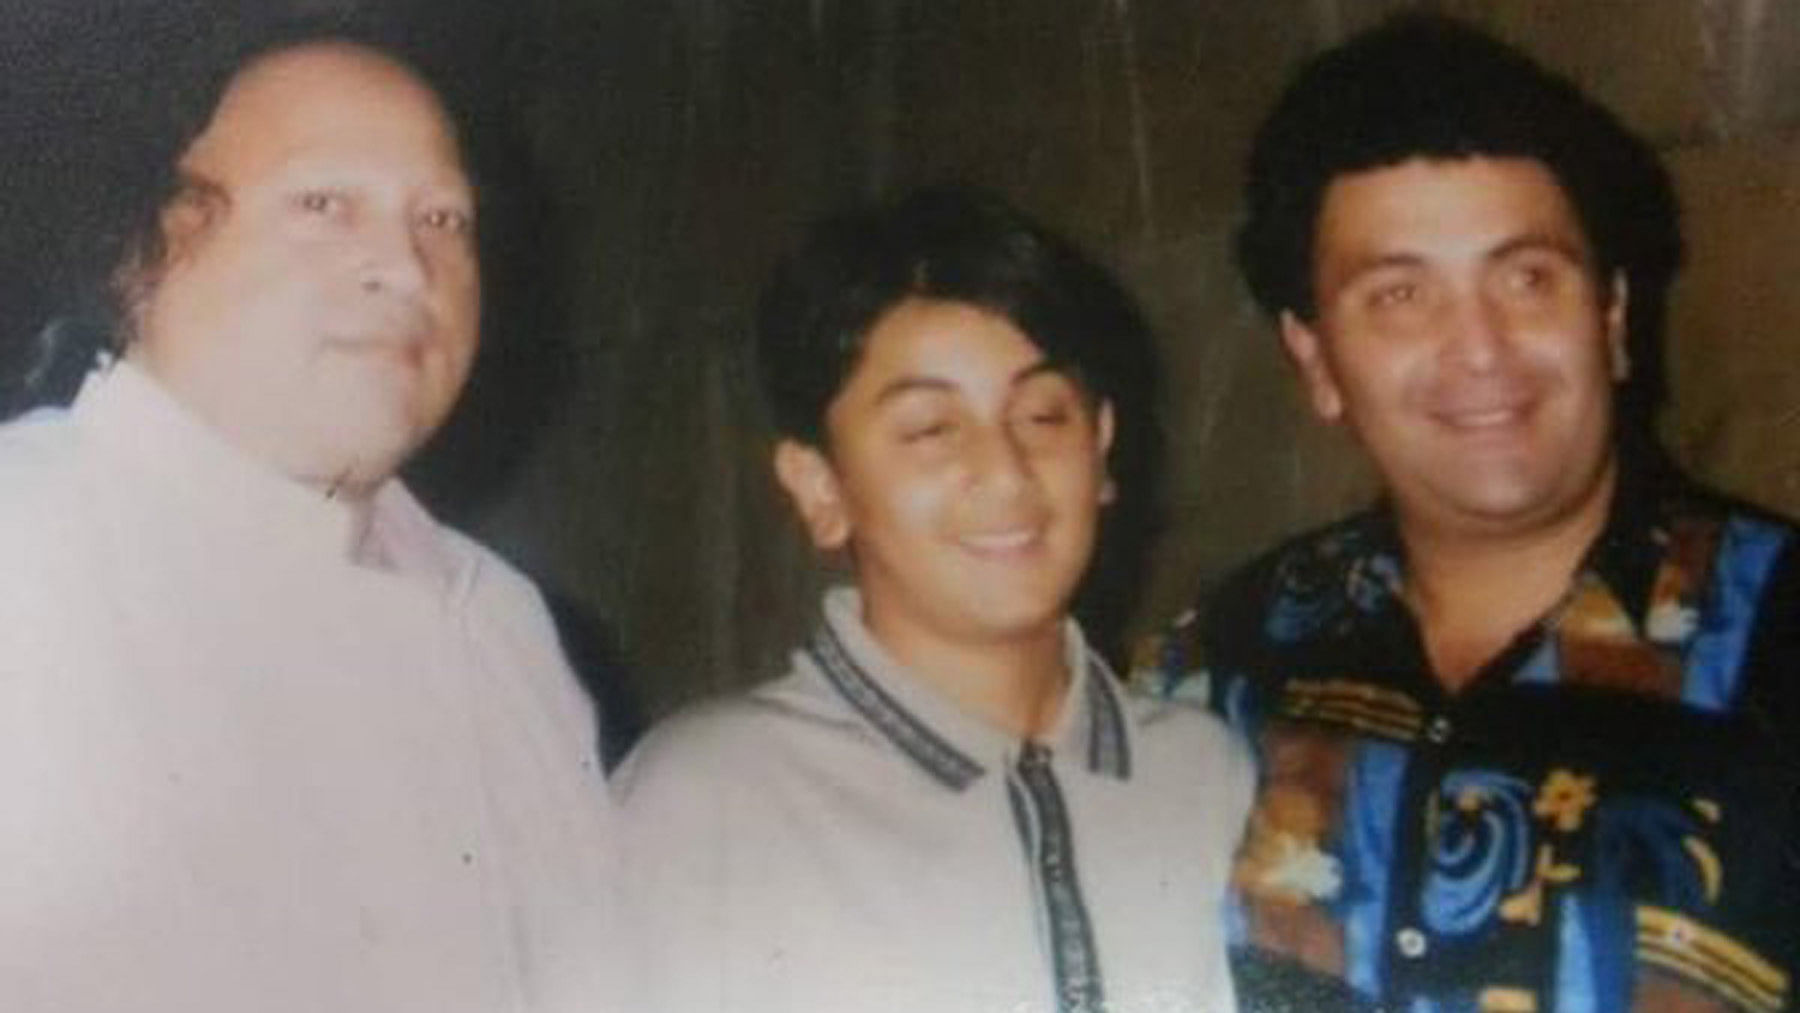 Nusrat Ali Khan (left), Ranbir Kapoor and Rishi Kapoor (right) (Photo: twitter/<a href="https://twitter.com/chintskap">@chintskap</a>)